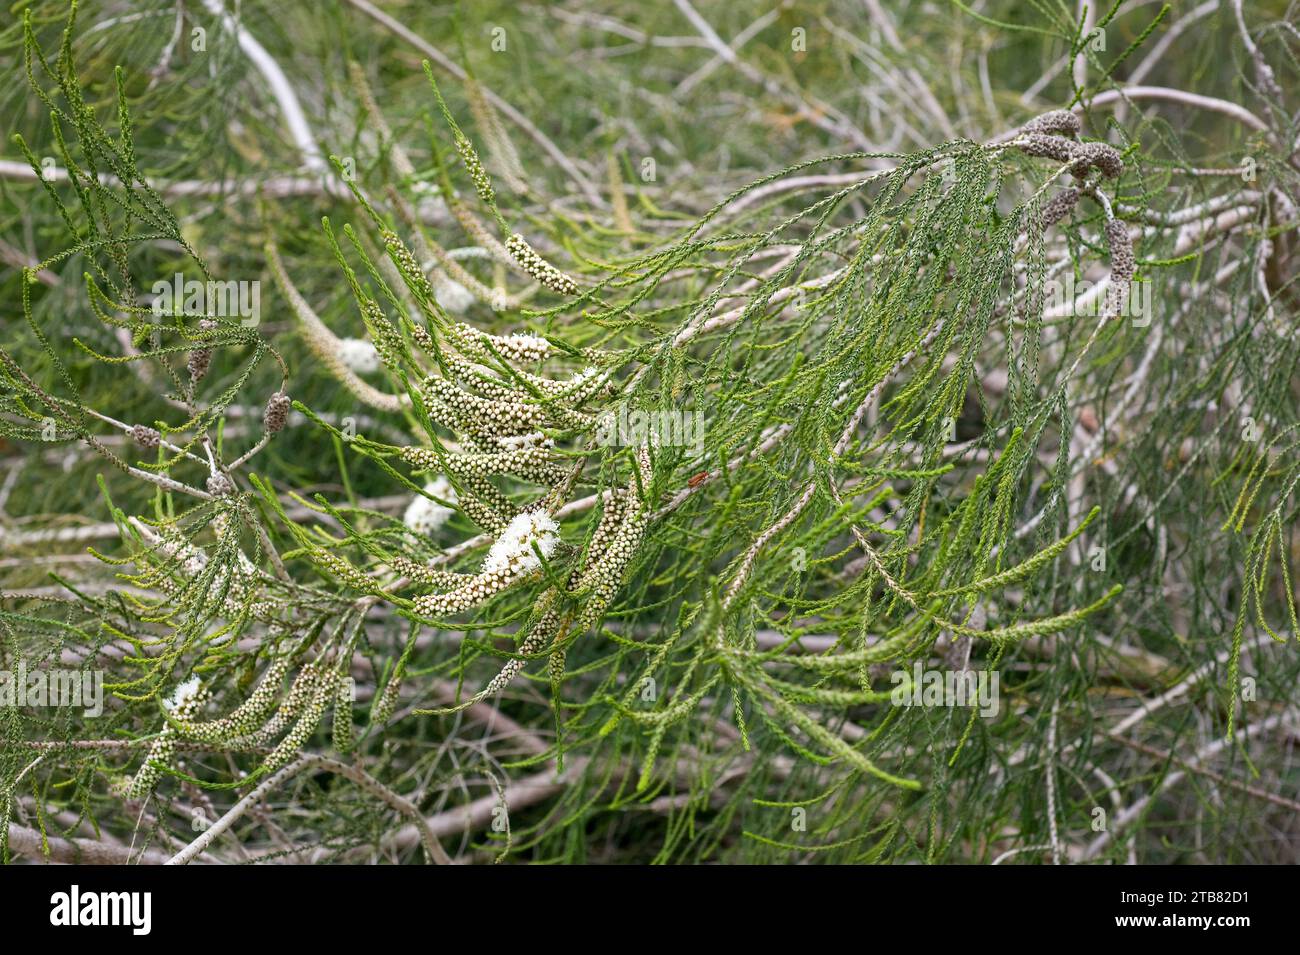 Chenille honey-myrtle (Melaleuca huegelii) is a shrub endemic to southwestern Australia. Inflorescences and leaves detail. Stock Photo